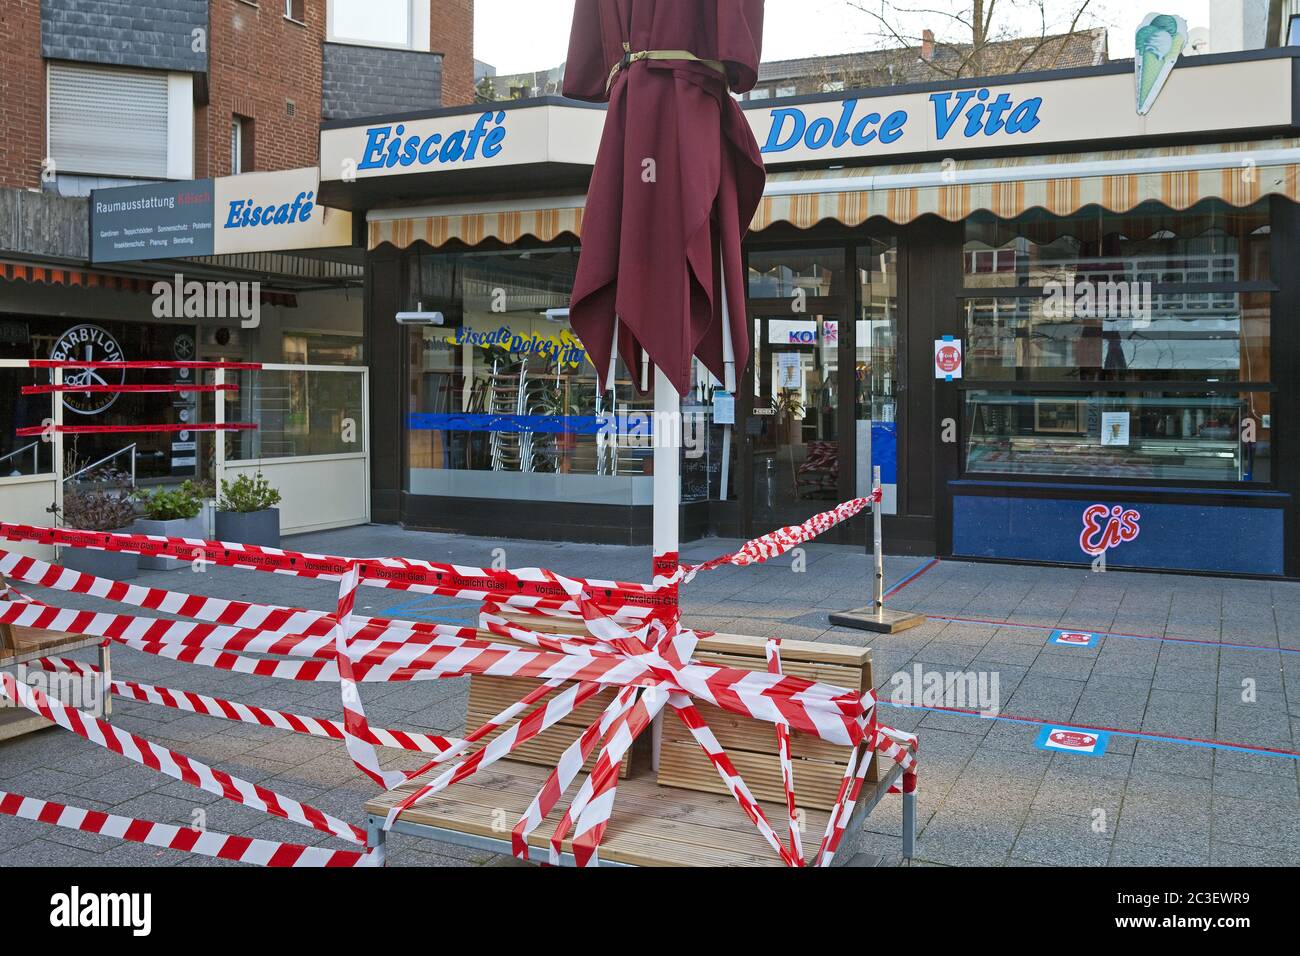 Germany, North Rhine-Westphalia, Witten, closed ice cream parlor “Dolce Vita”, corona crisis, 2020 Stock Photo